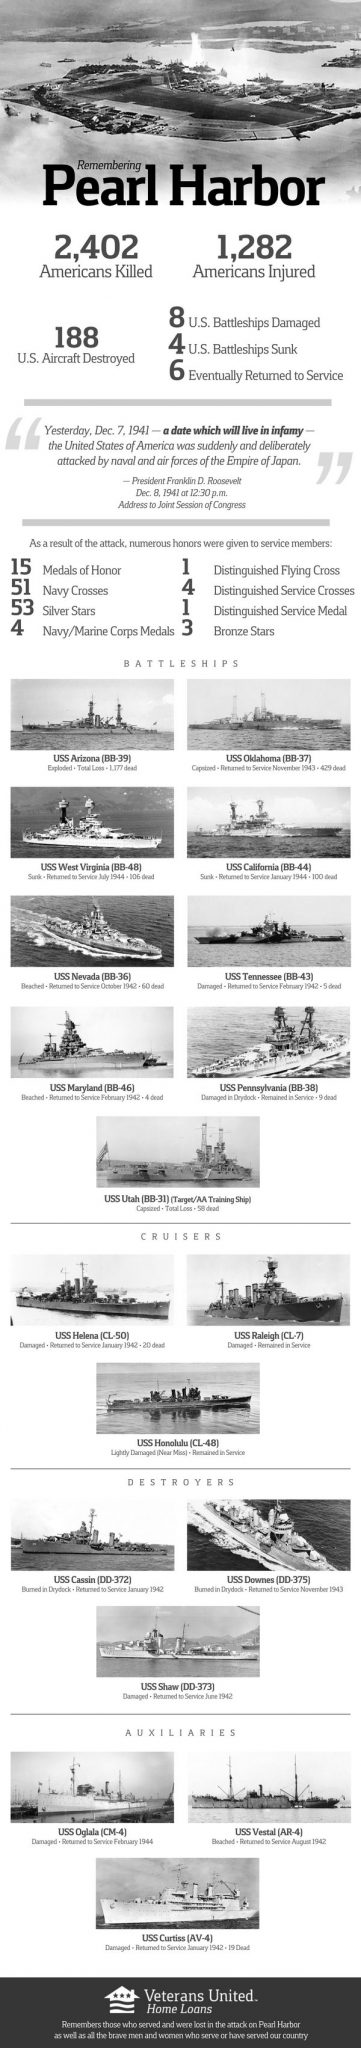 Infografia Pearl Harbor 